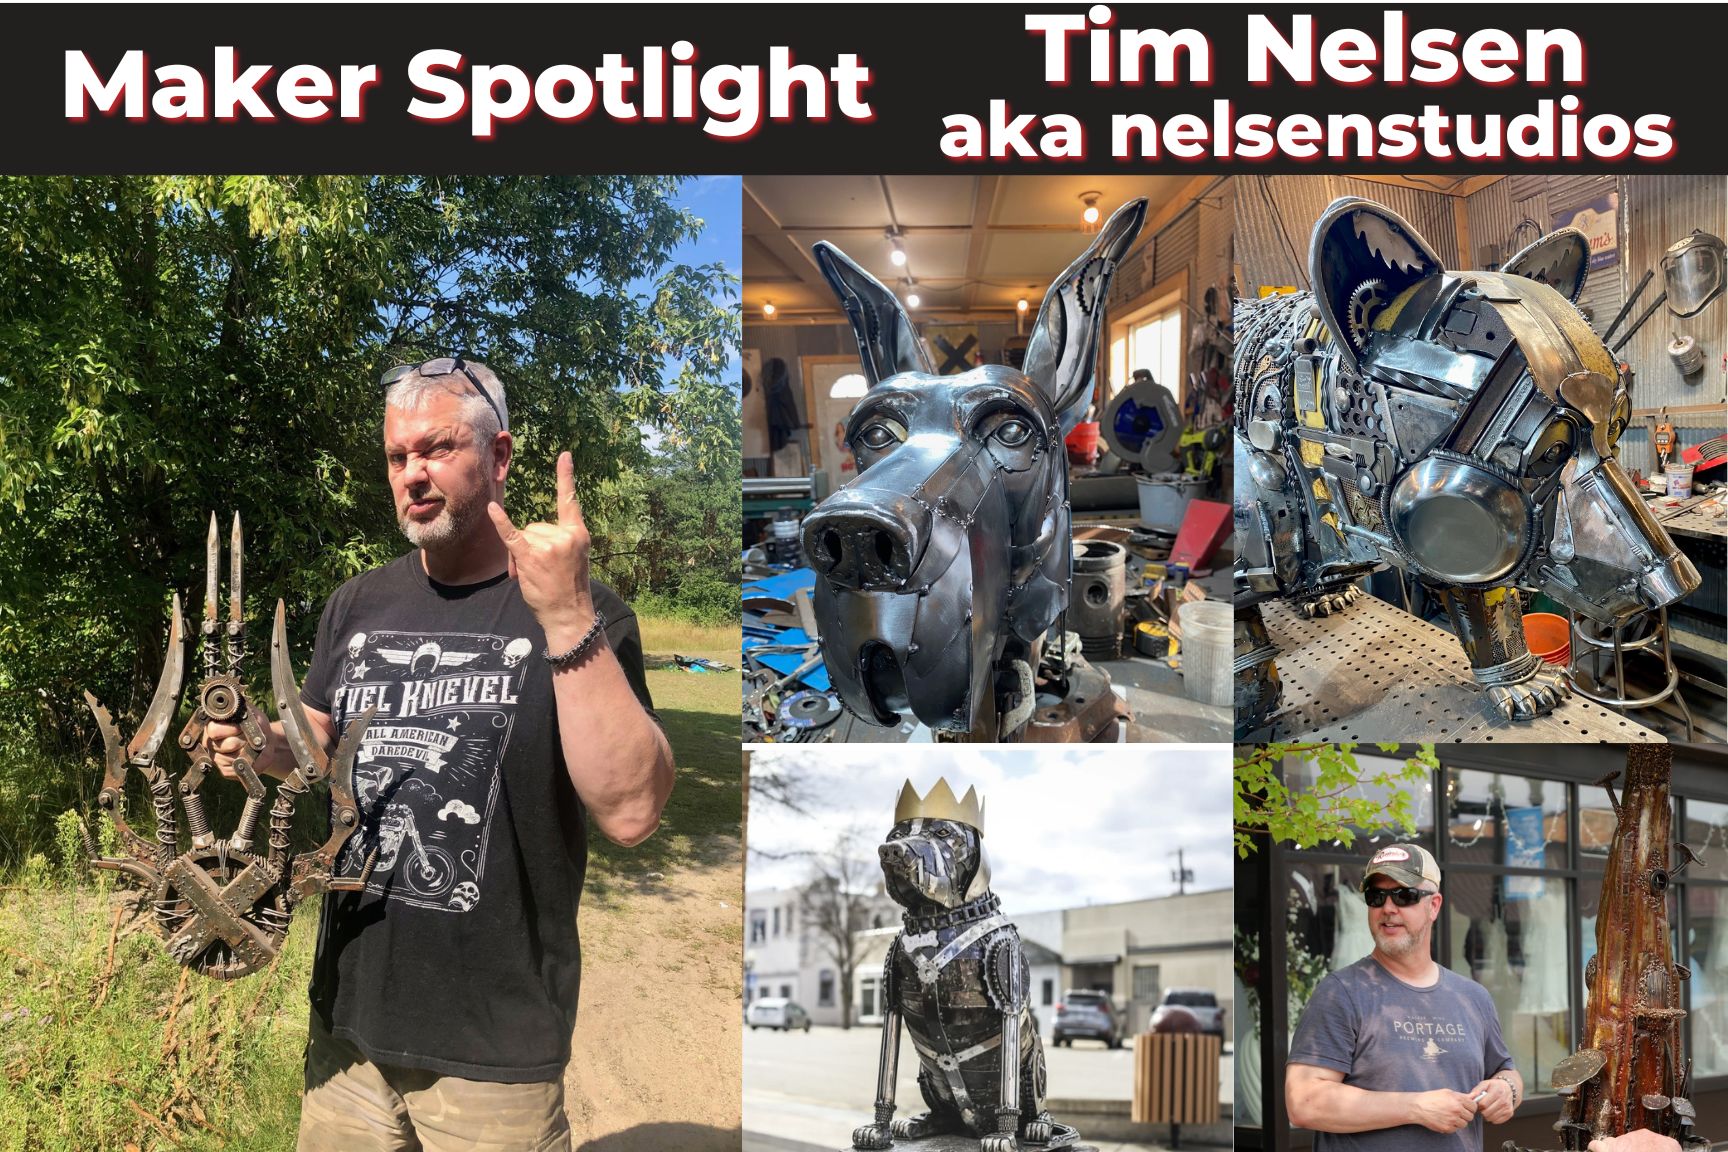 Empire Abrasives Maker Spotlight on Tim Nelsen, a talented metal artist, sculptor, and designer